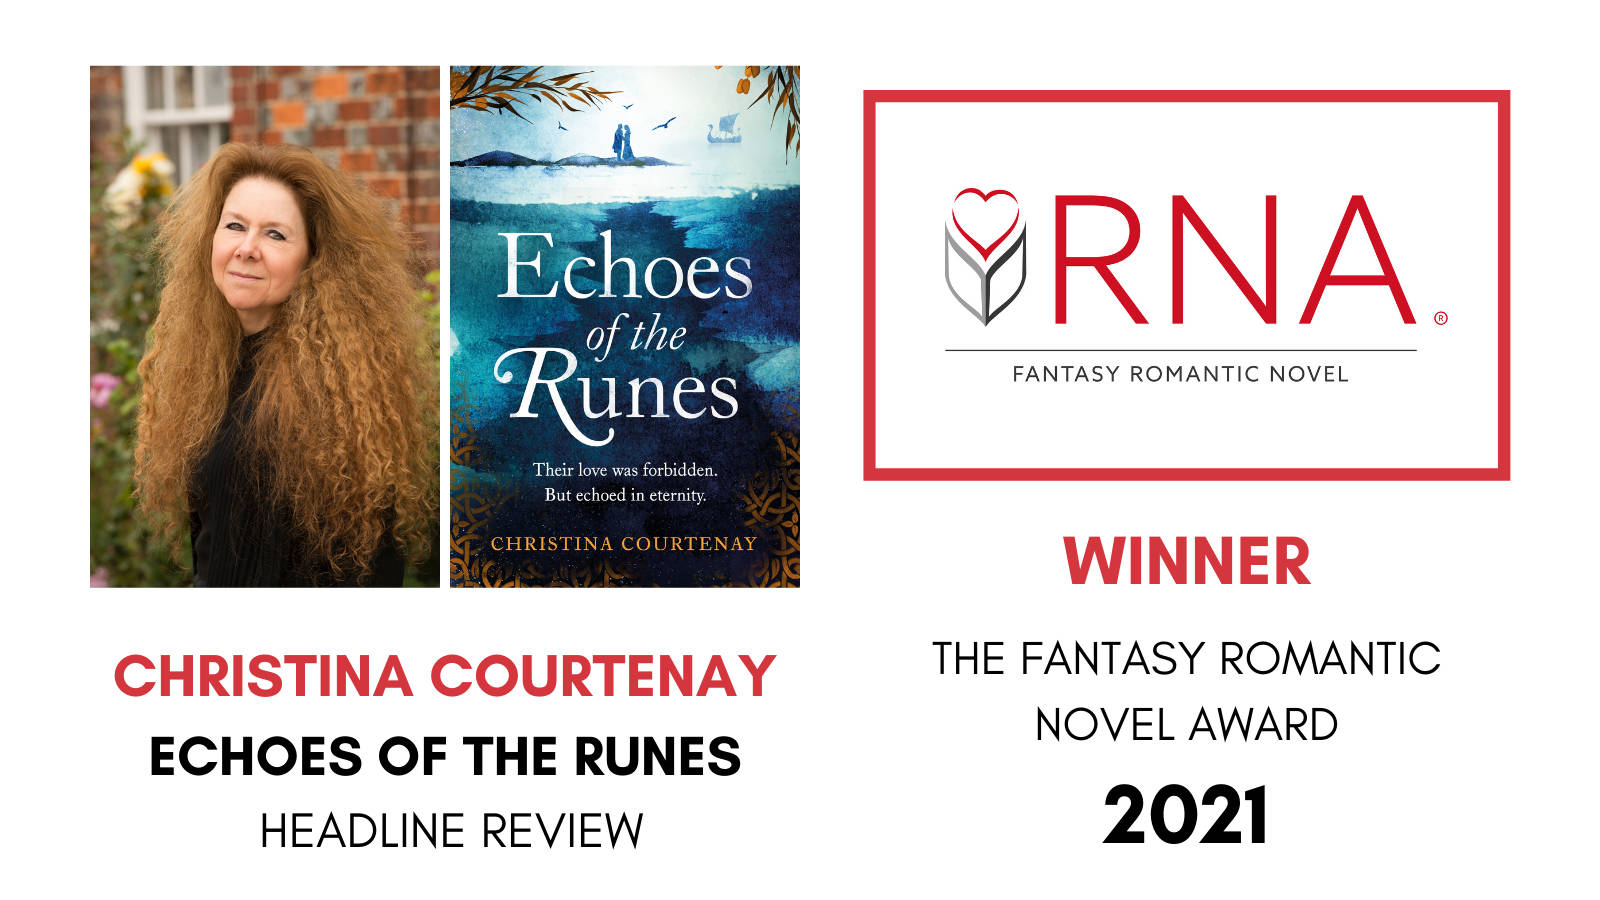 image shows: Winner of the 2021 RNA Fantasy Romantic Novel Award